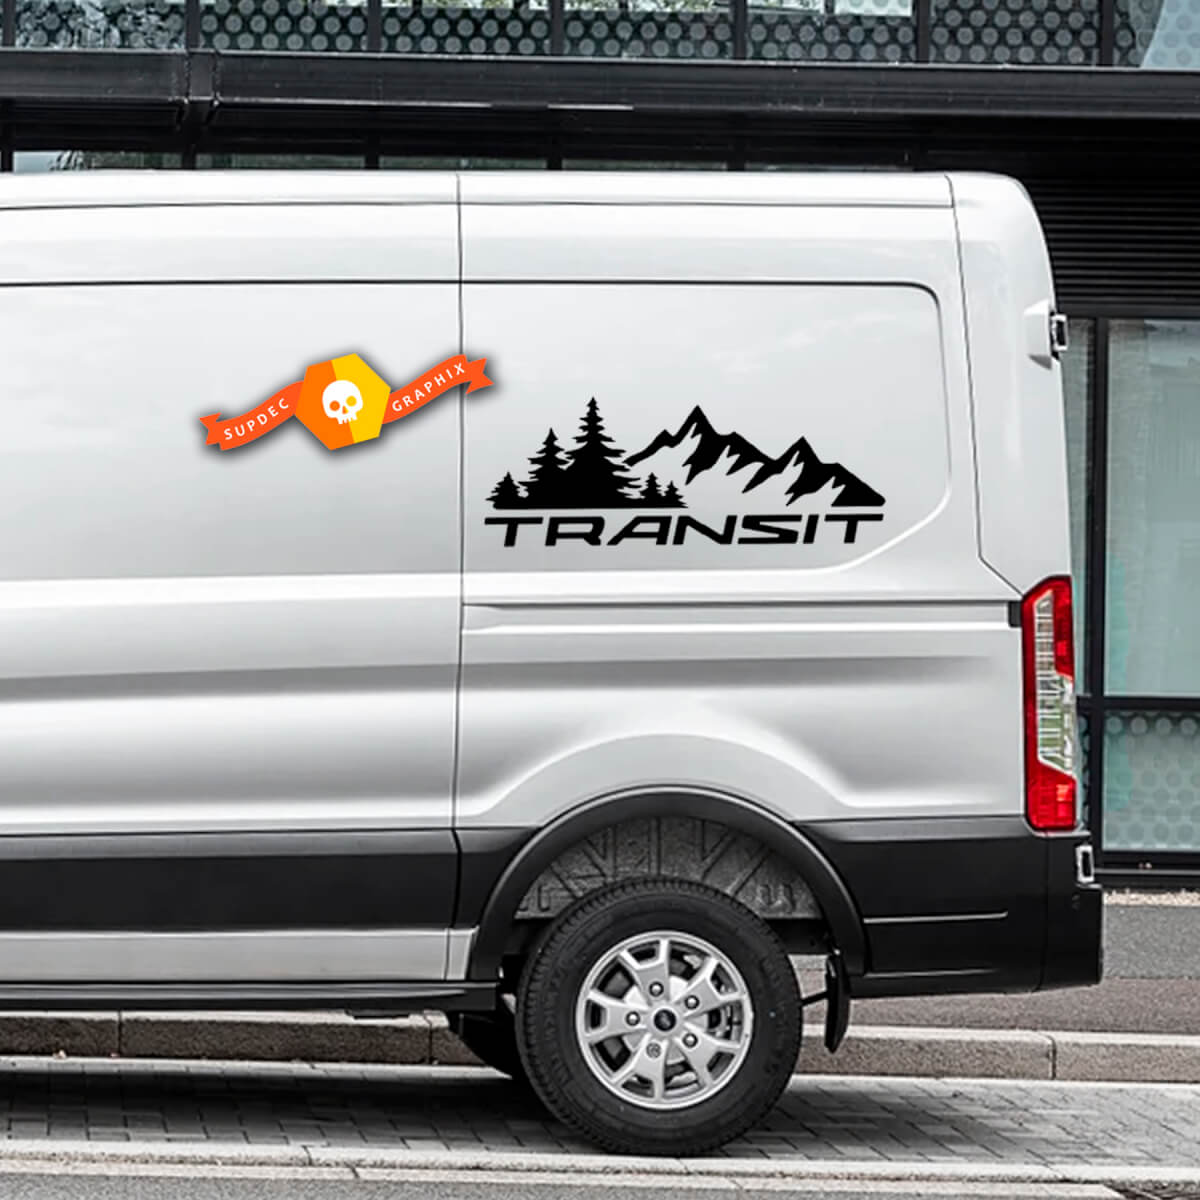 2023 FORD TRANSIT-TRAIL Mountain Forest Logo TRANSIT decalcomanie in vinile di qualsiasi dimensione si adatta a Nissan, Toyota, Chevy, GMC, Dodge, Ford
